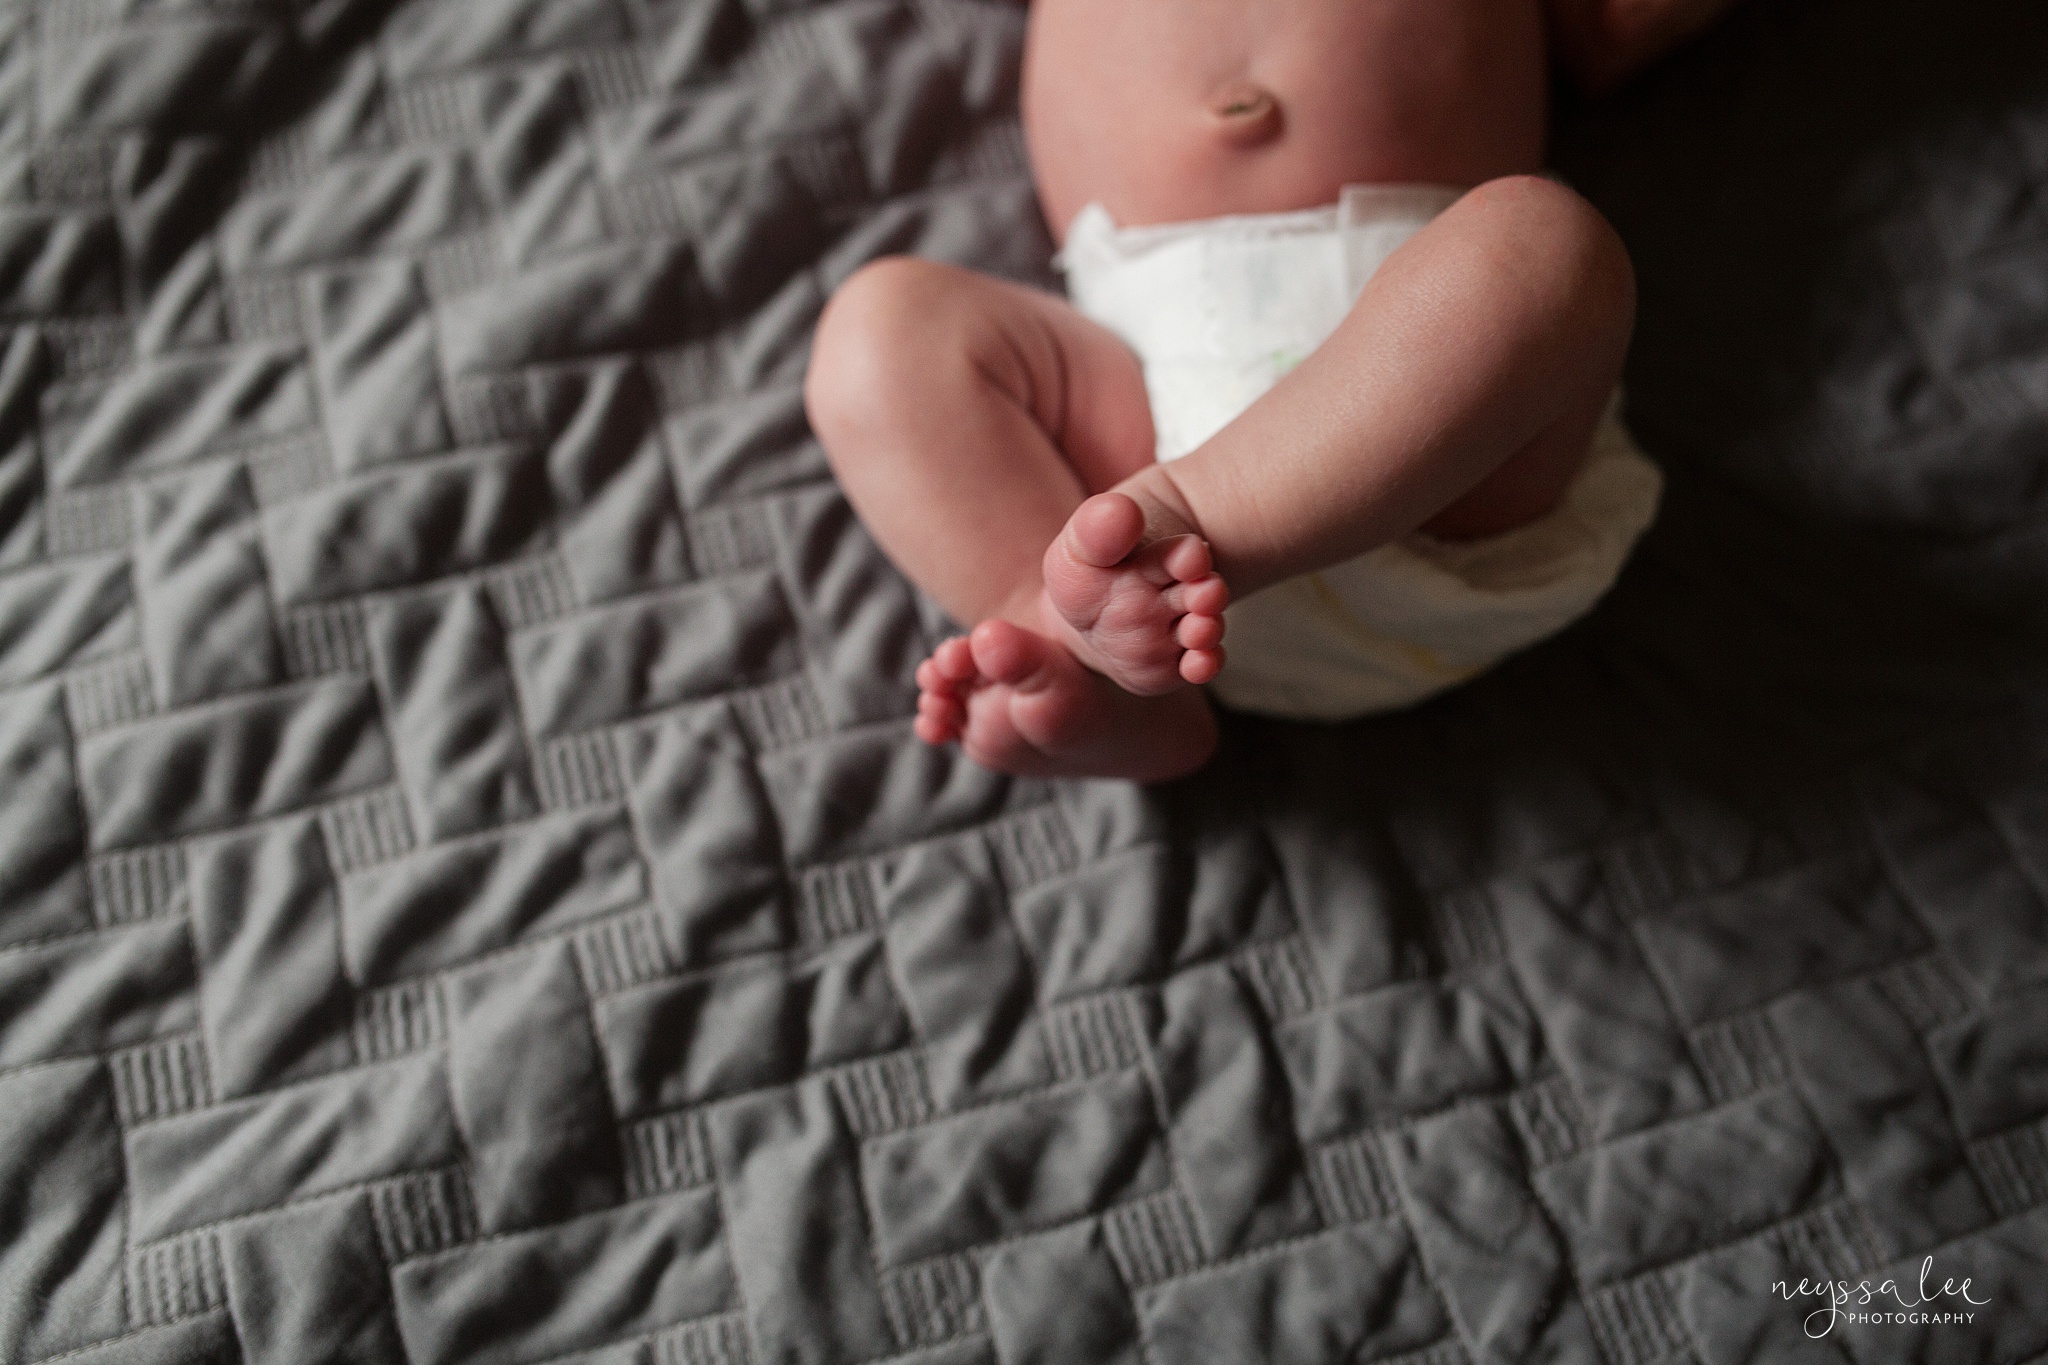 Newborn baby feet on bed, dressed in diaper